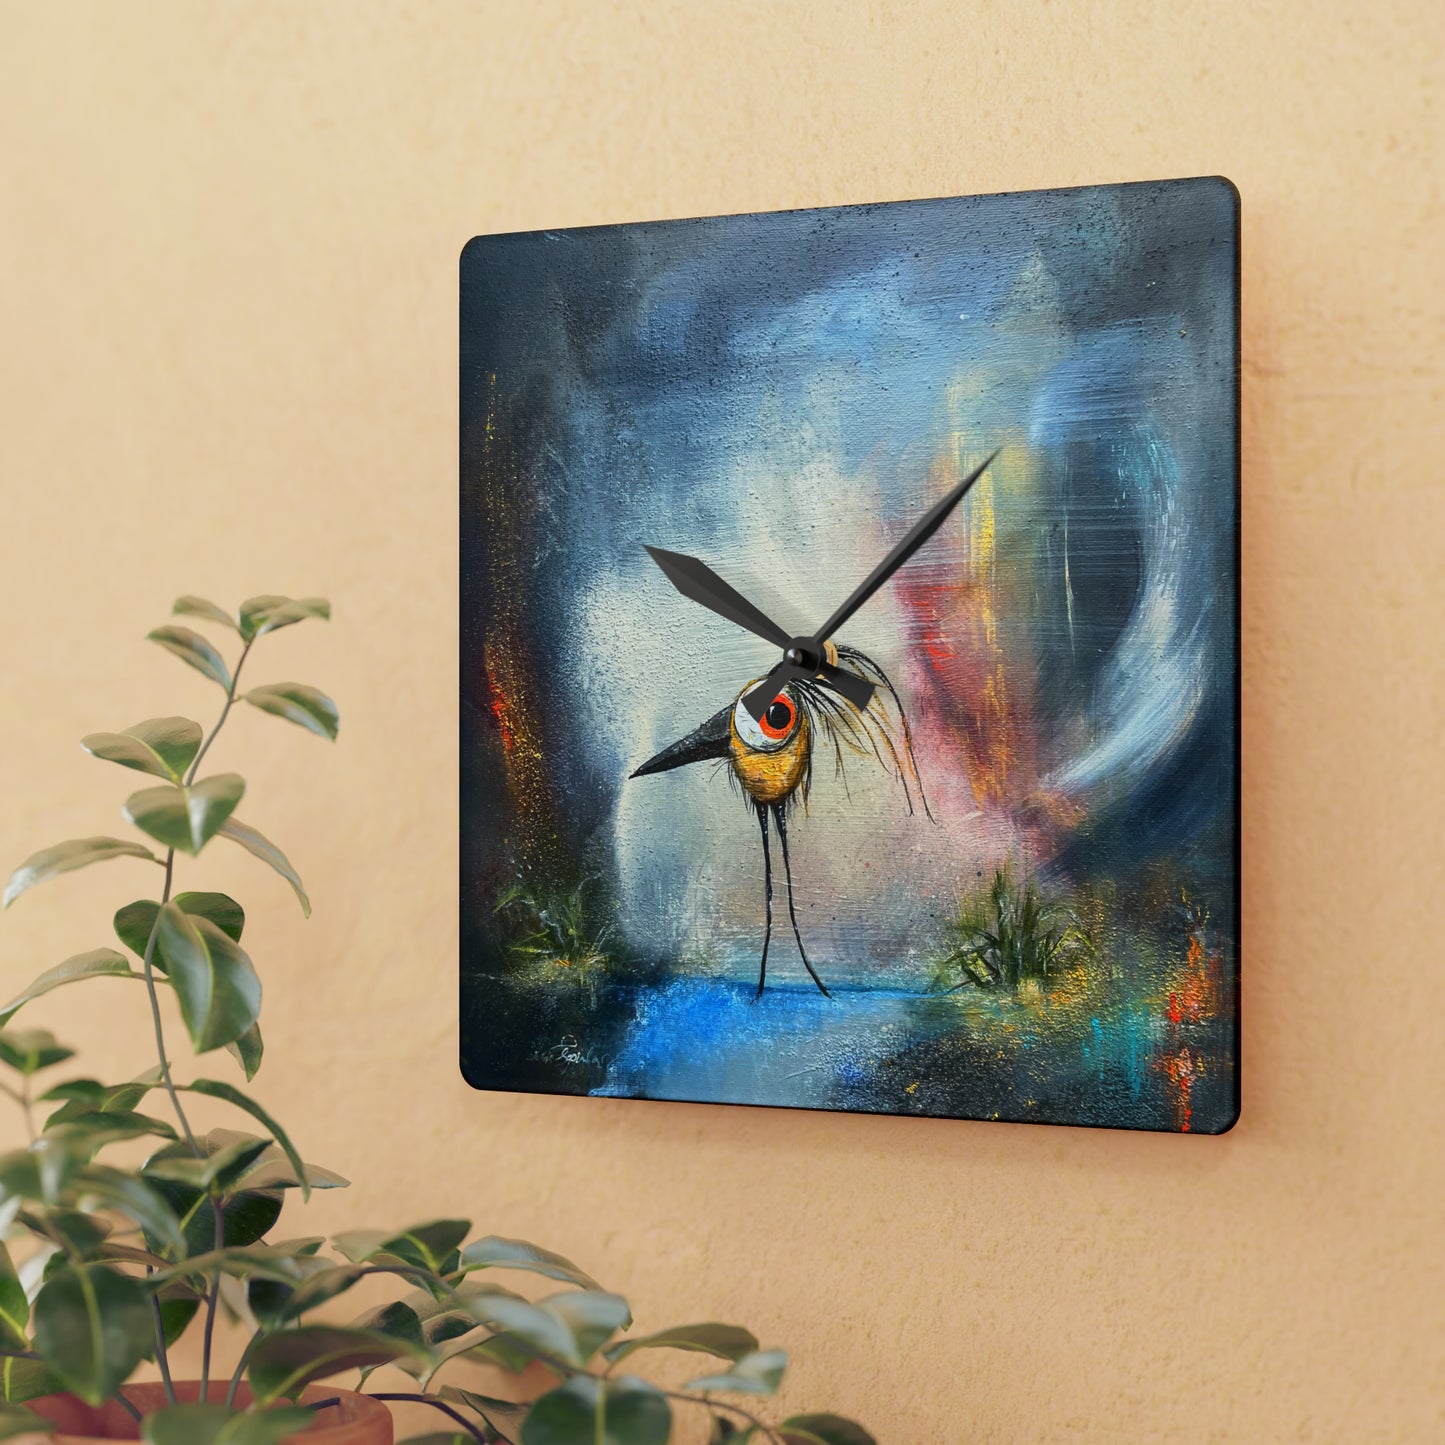 Abstract Bird Clock 'Warble' - Vibrant Wall Decor - Reprint by Asia Popinska - 10.75''×10.75'' - Acrylic, 1 of a kind item.